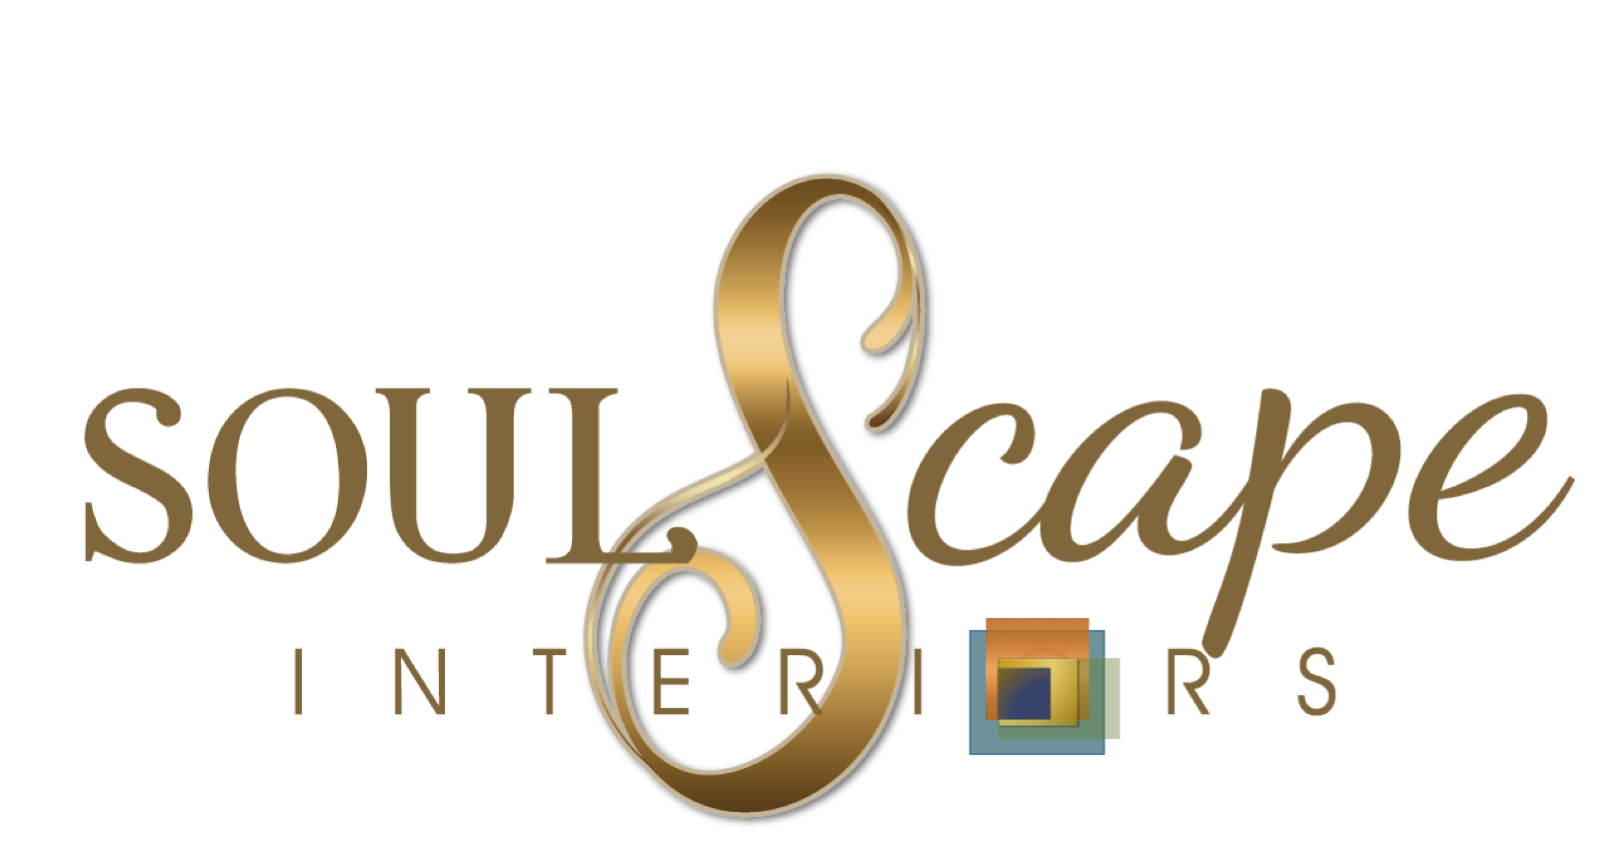 SoulScape Interiors Inc